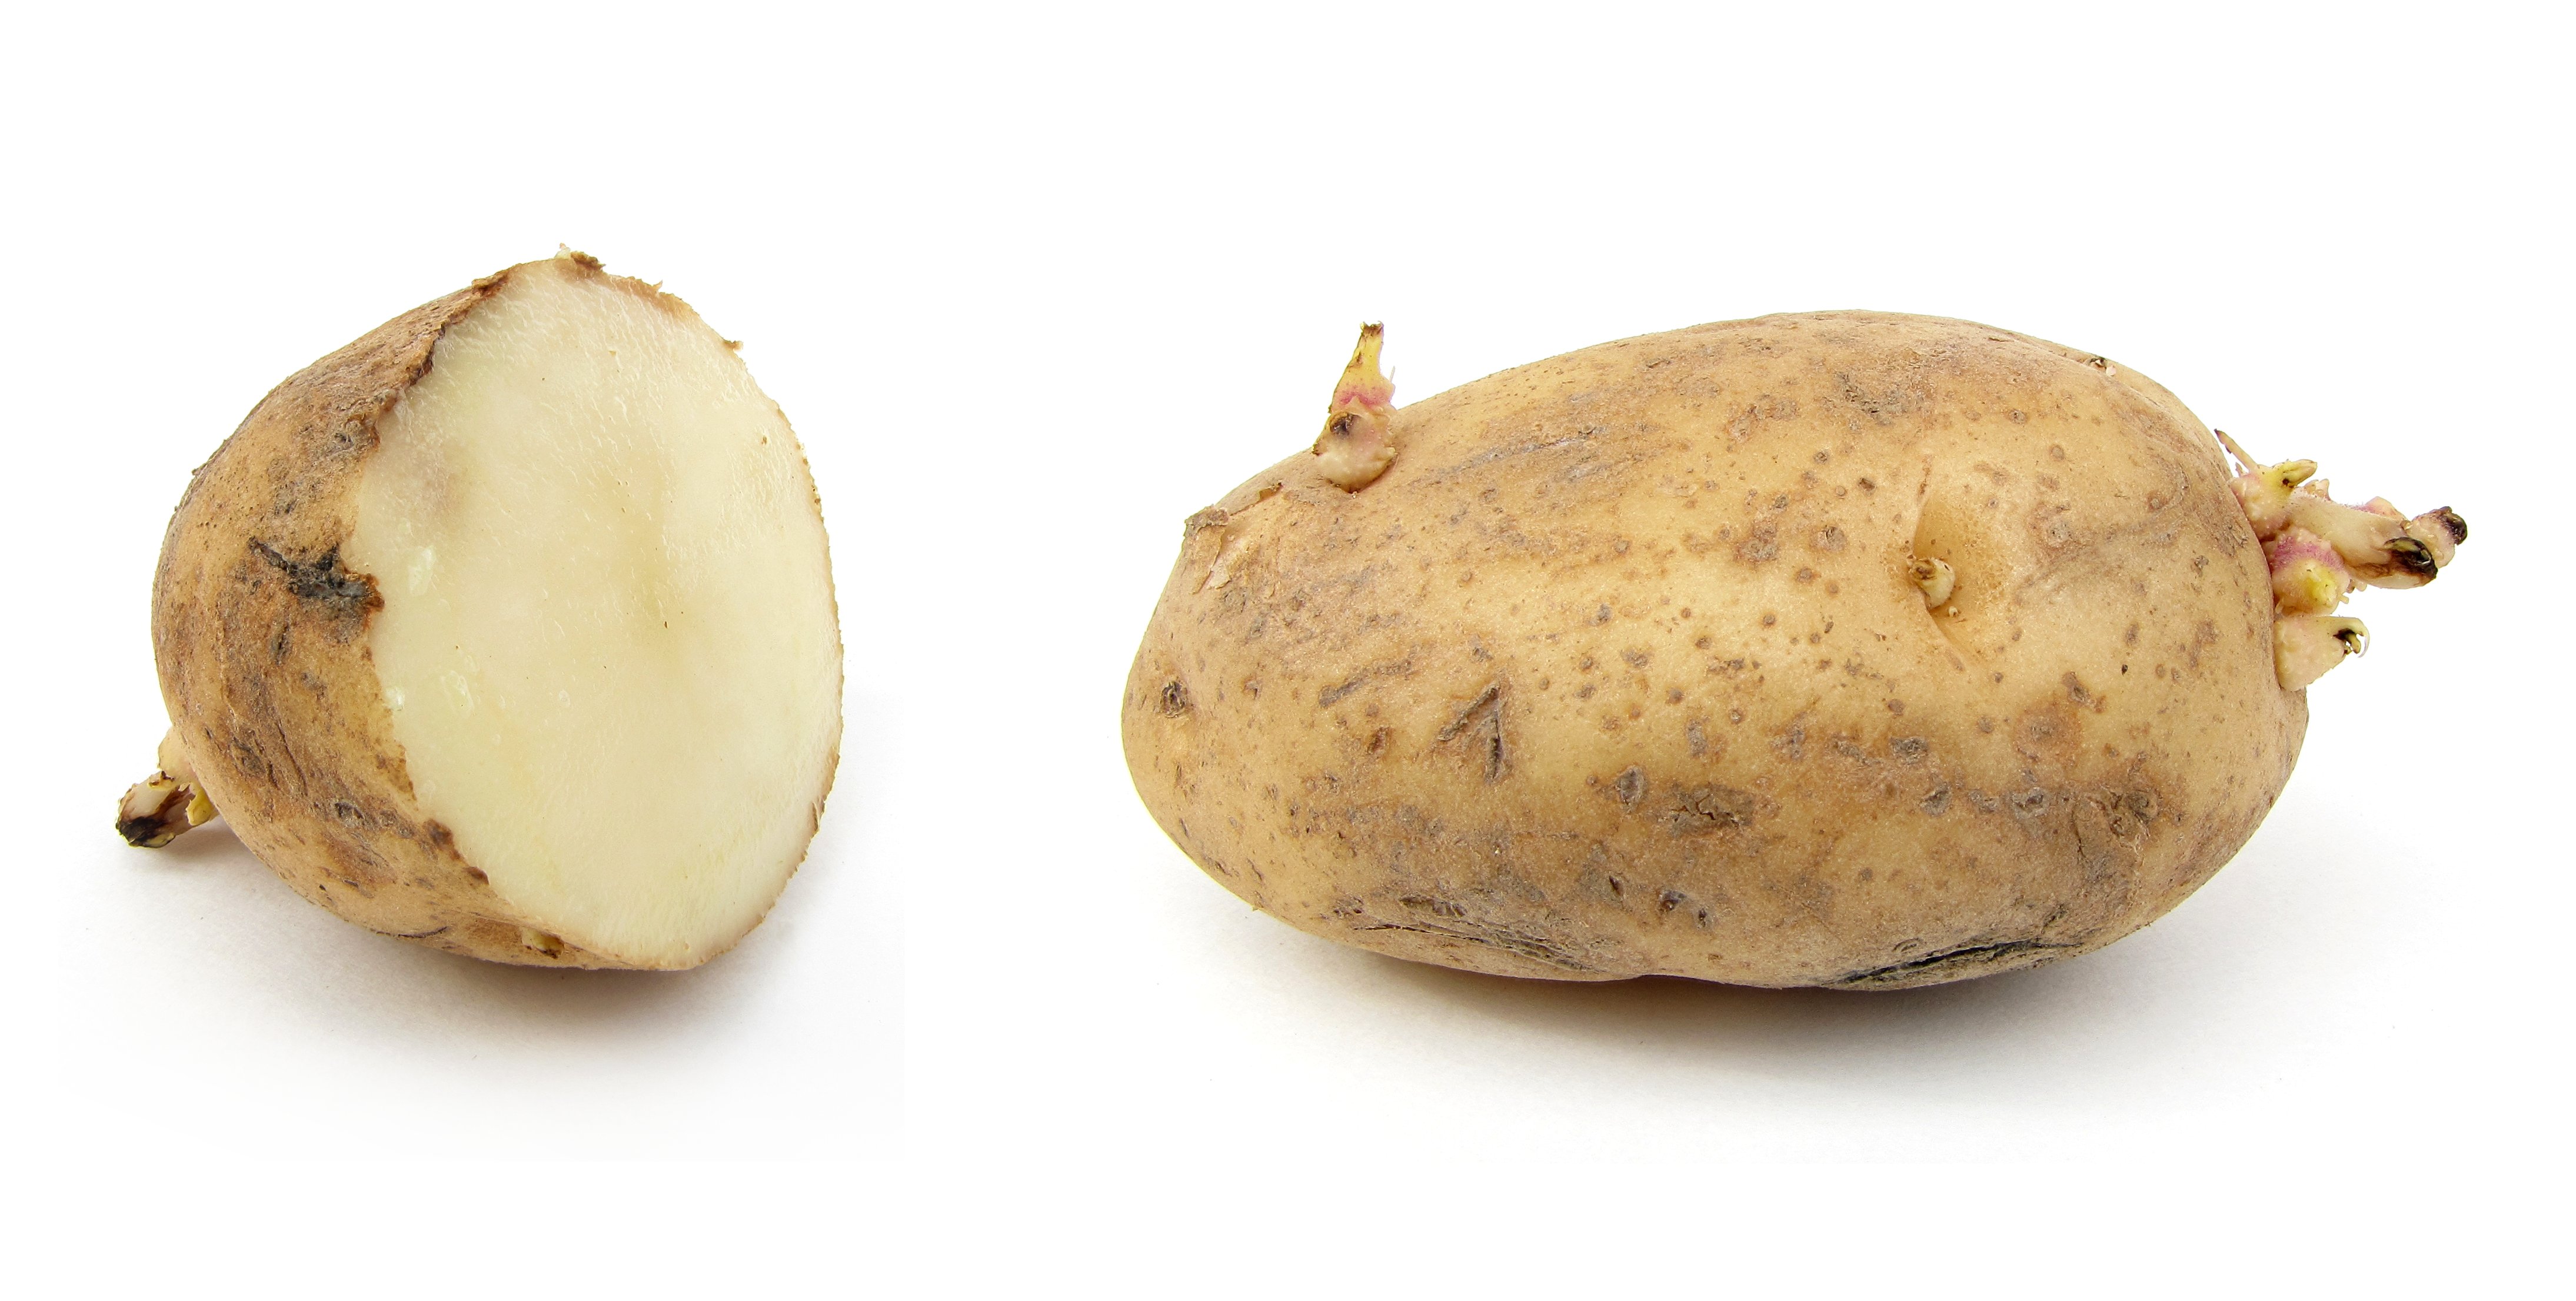 The world-famous potato